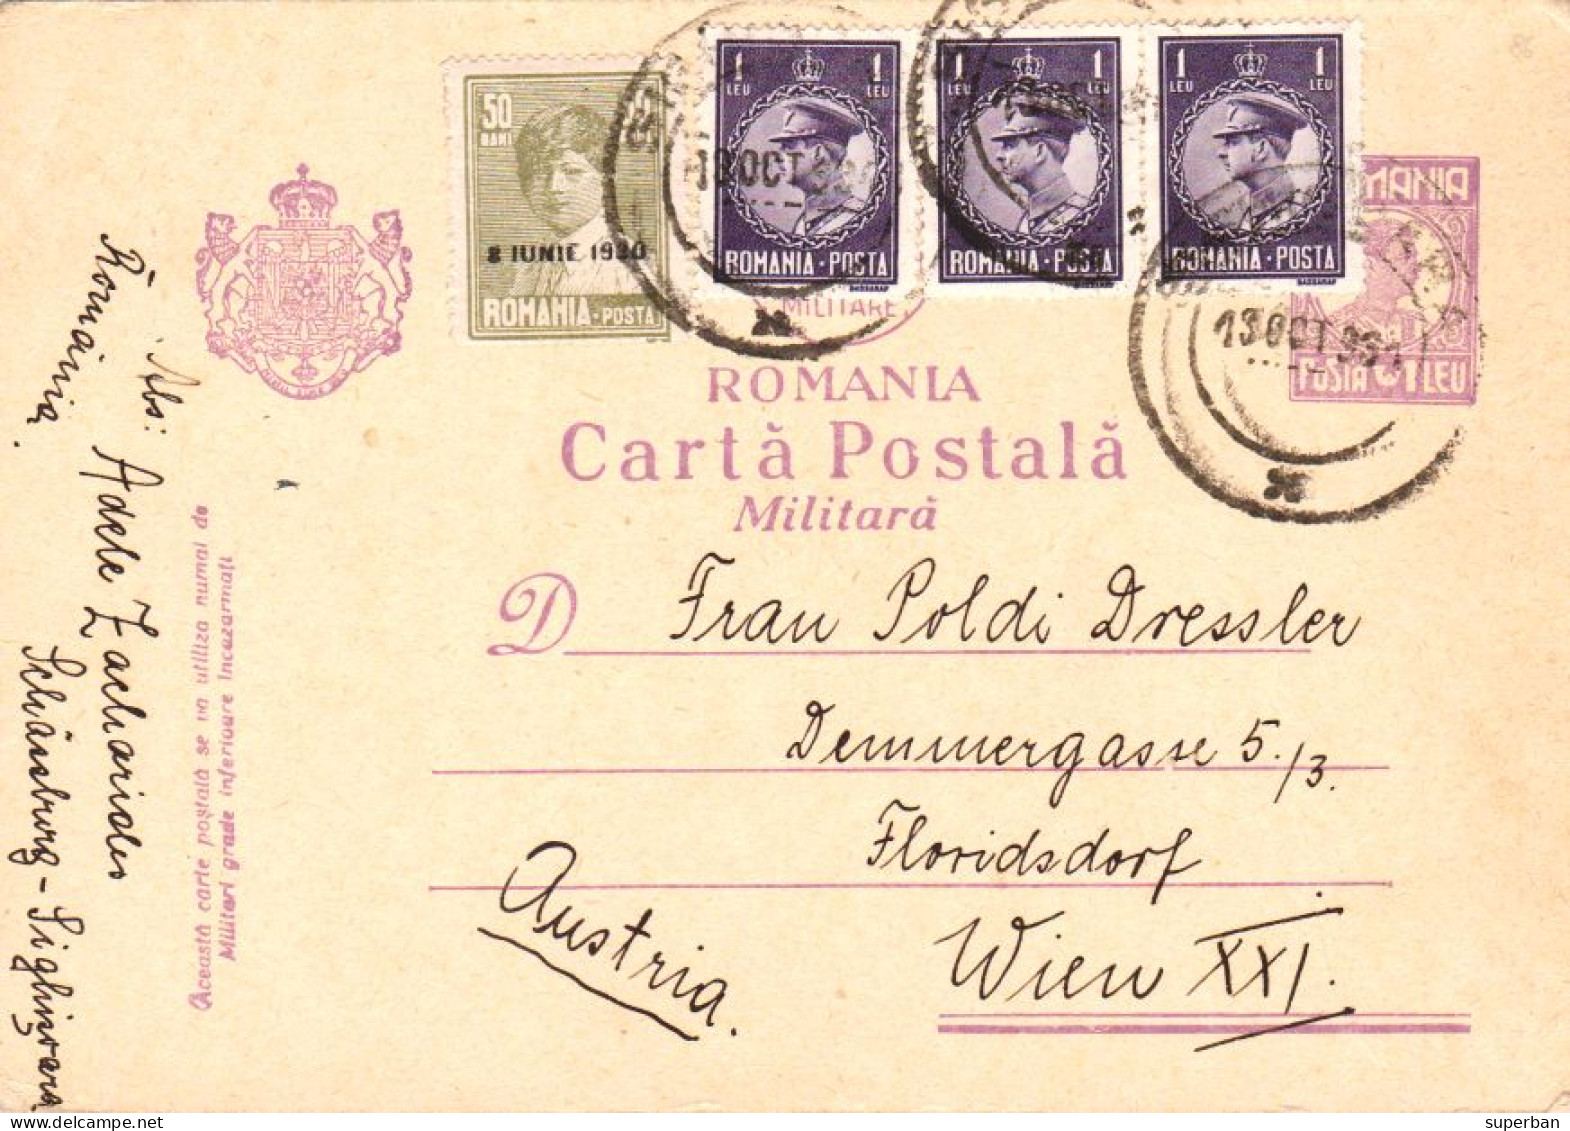 ROMANIA : CARTE POSTALA MILITARA / CARTE POSTALE MILITAIRE / MILITARY POSTCARD : SIGHISOARA -> WIEN ~ 1930 - '31 (an739) - Postal Stationery